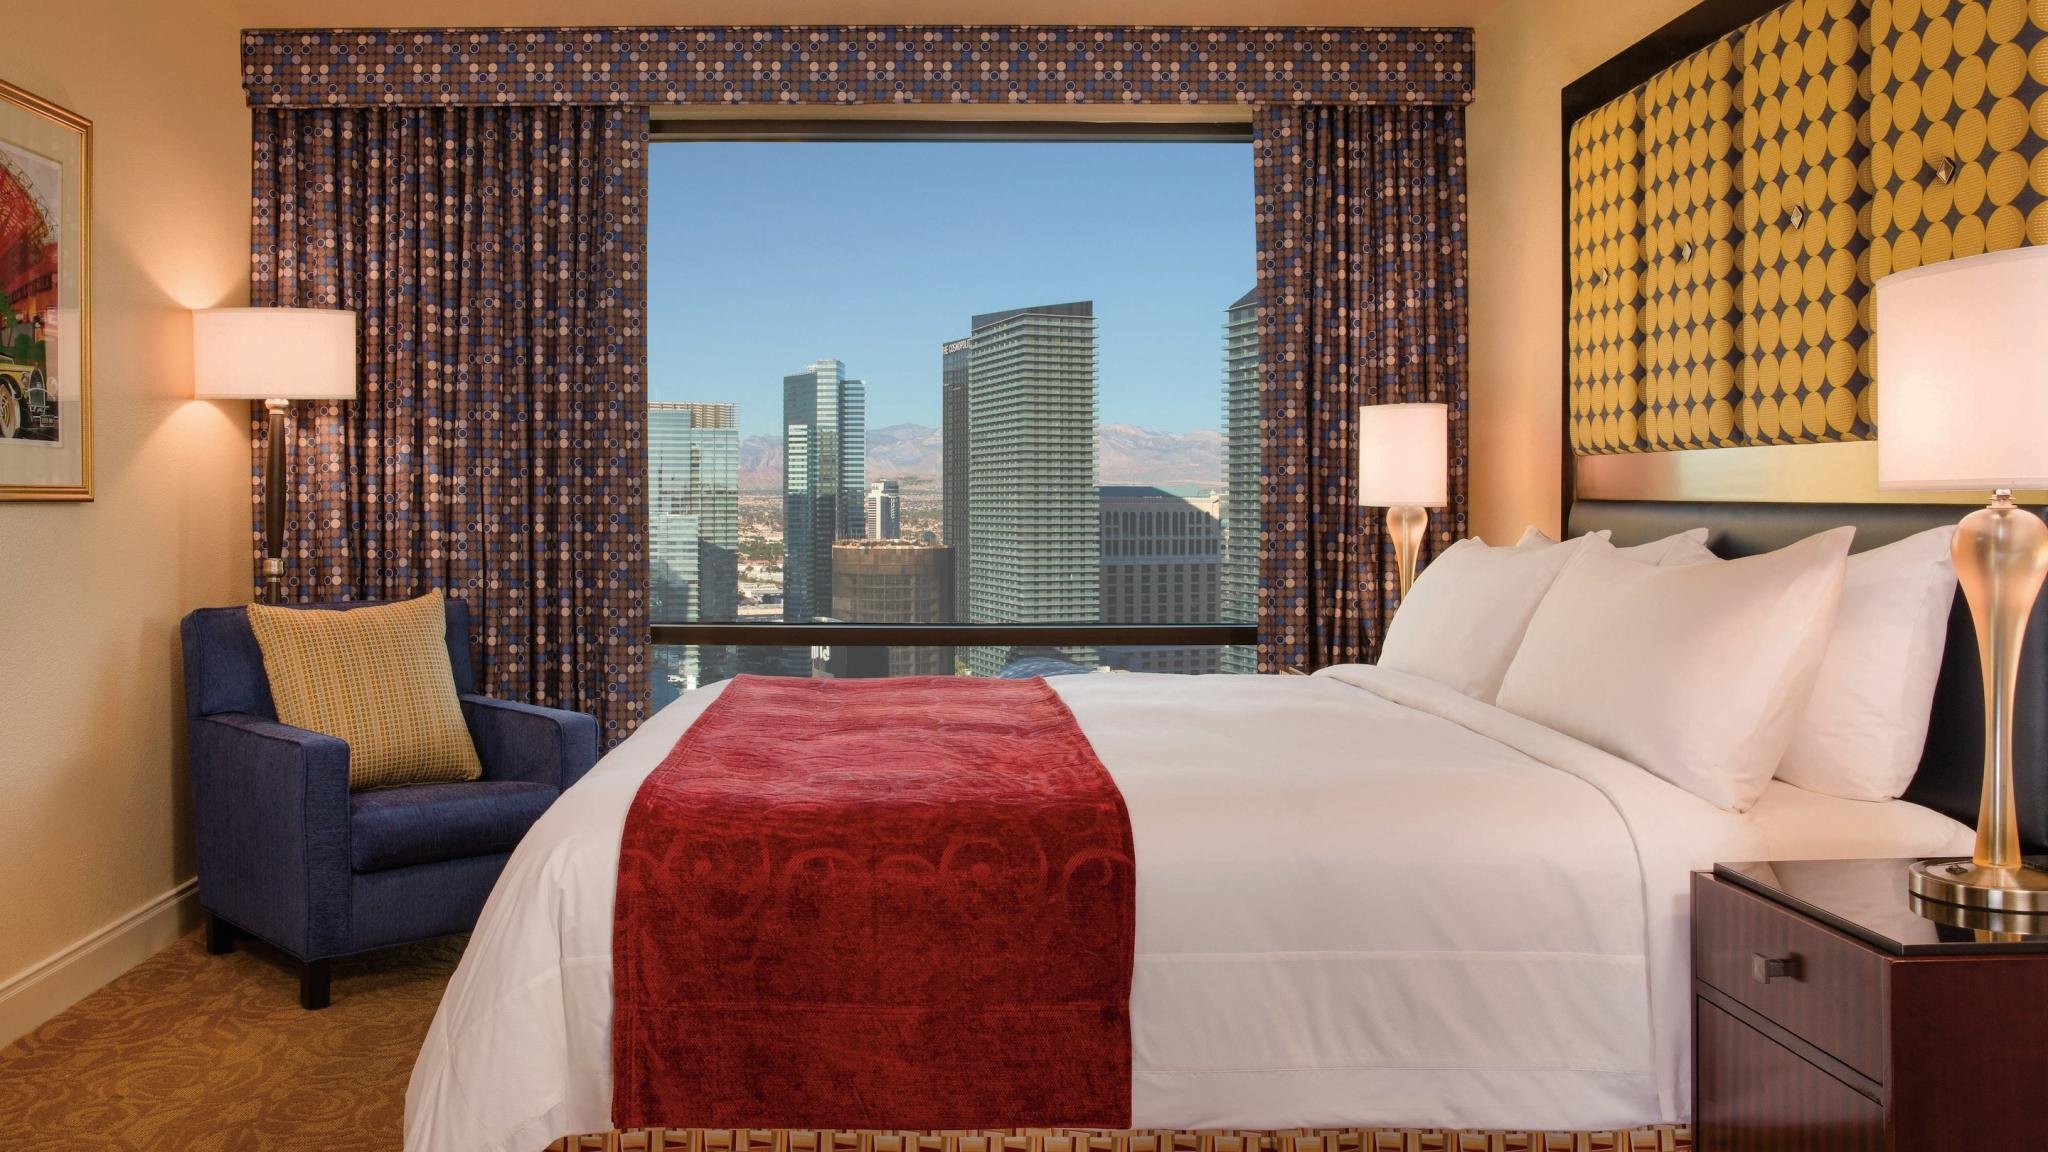 Grand Chateau 2 Bedroom Luxury Condo - Luxury Home Exchange in Las Vegas,  Nevada, United States